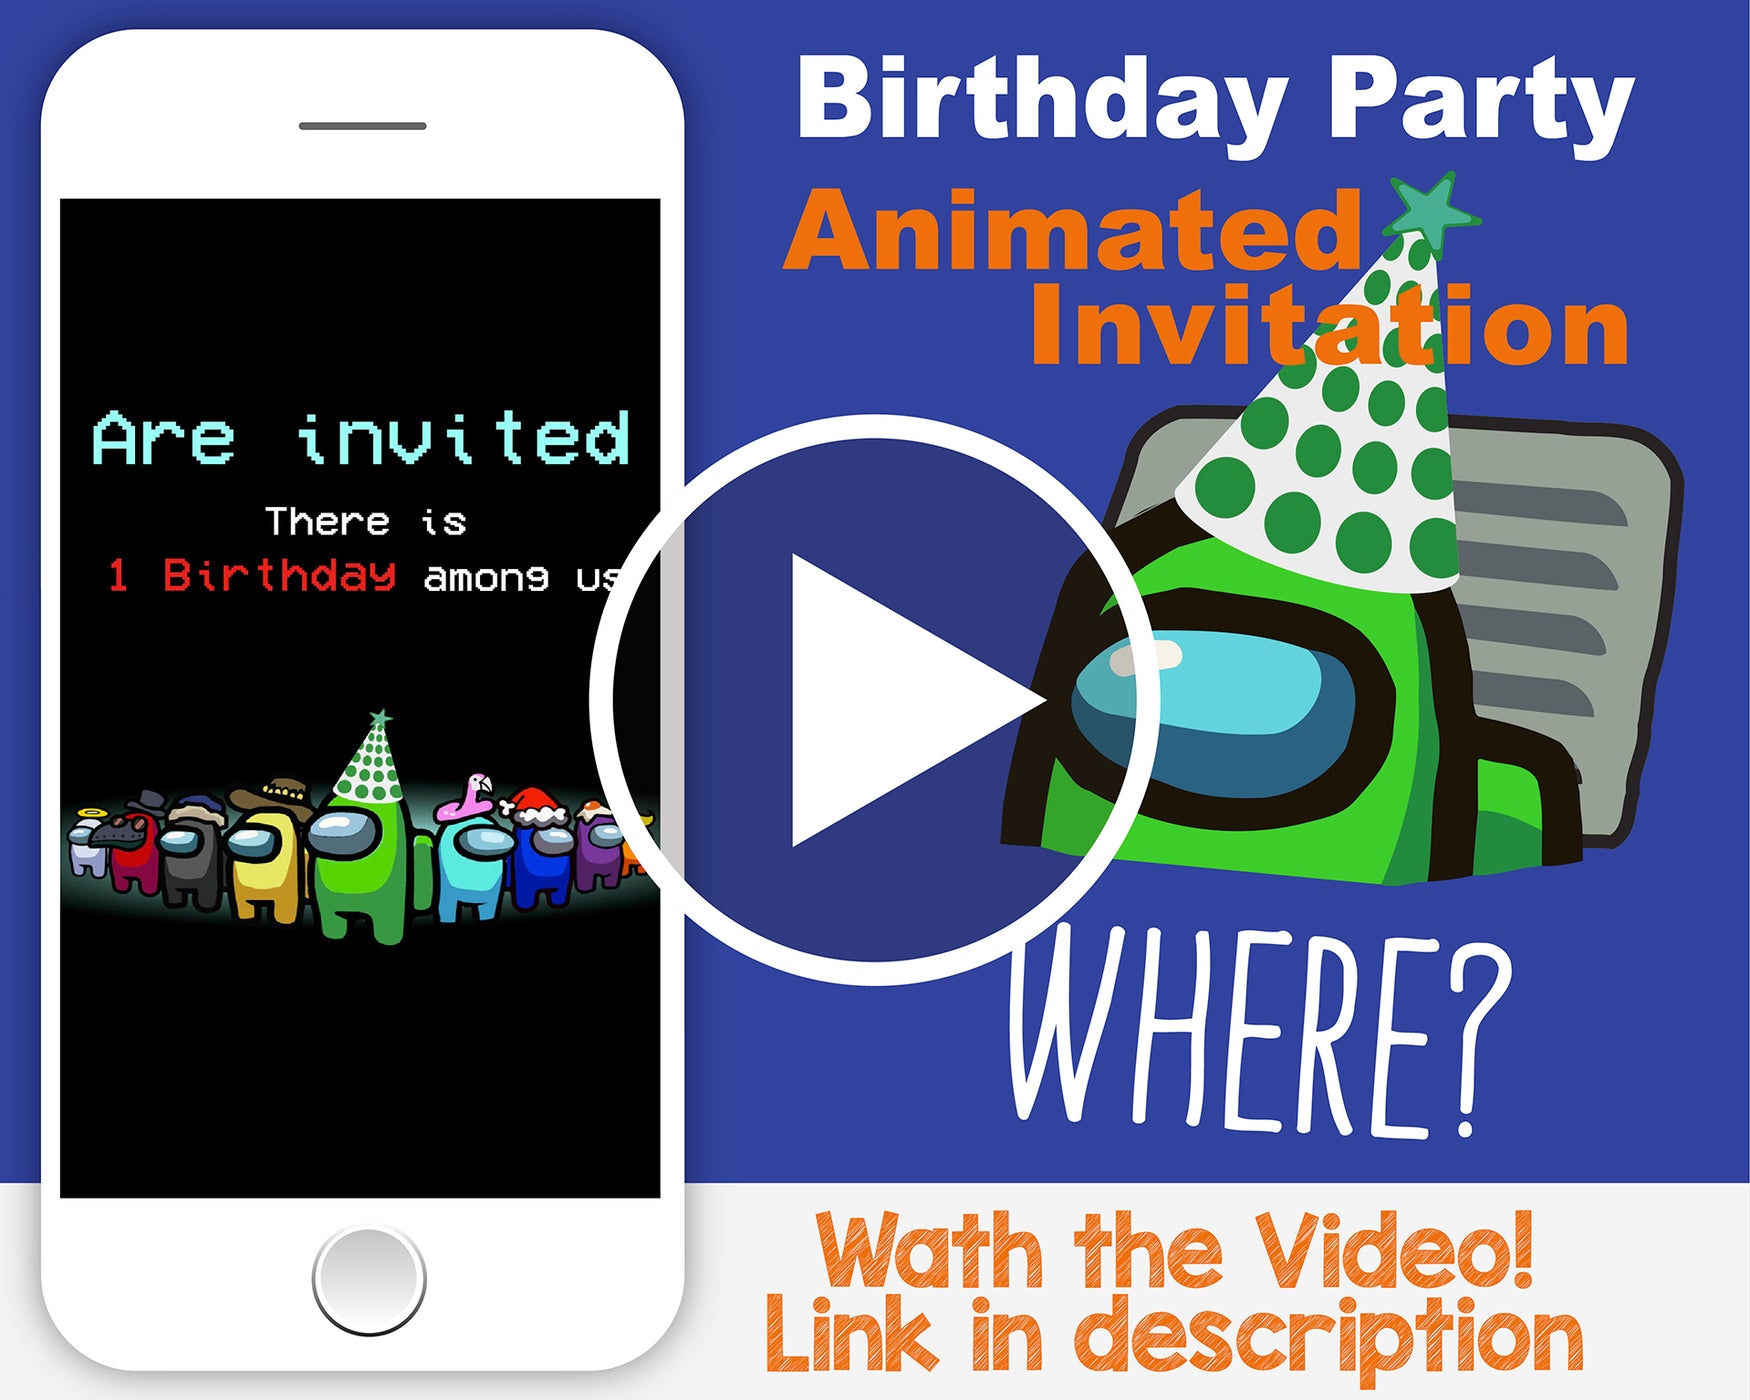 Among us Birthday Video Invitation | Among us Animated Invitation